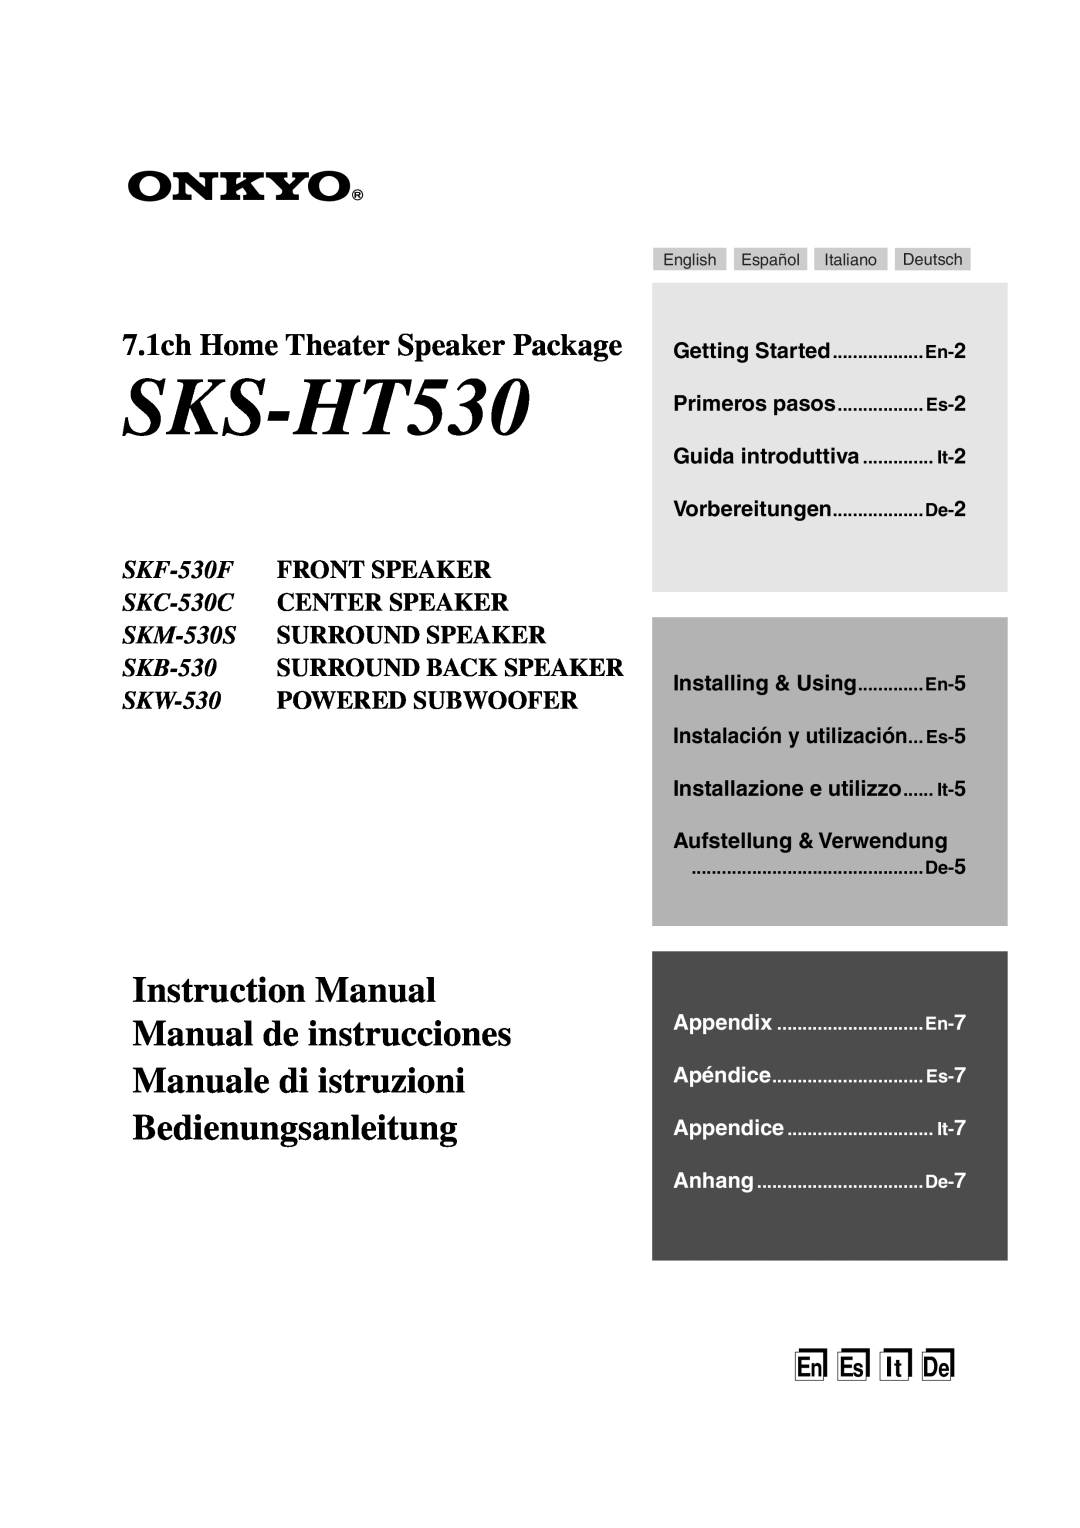 Onkyo SKS-HT530 instruction manual Aufstellung & Verwendung, Guida introduttiva, Installing & Using, En-7, Apéndice, Es-7 